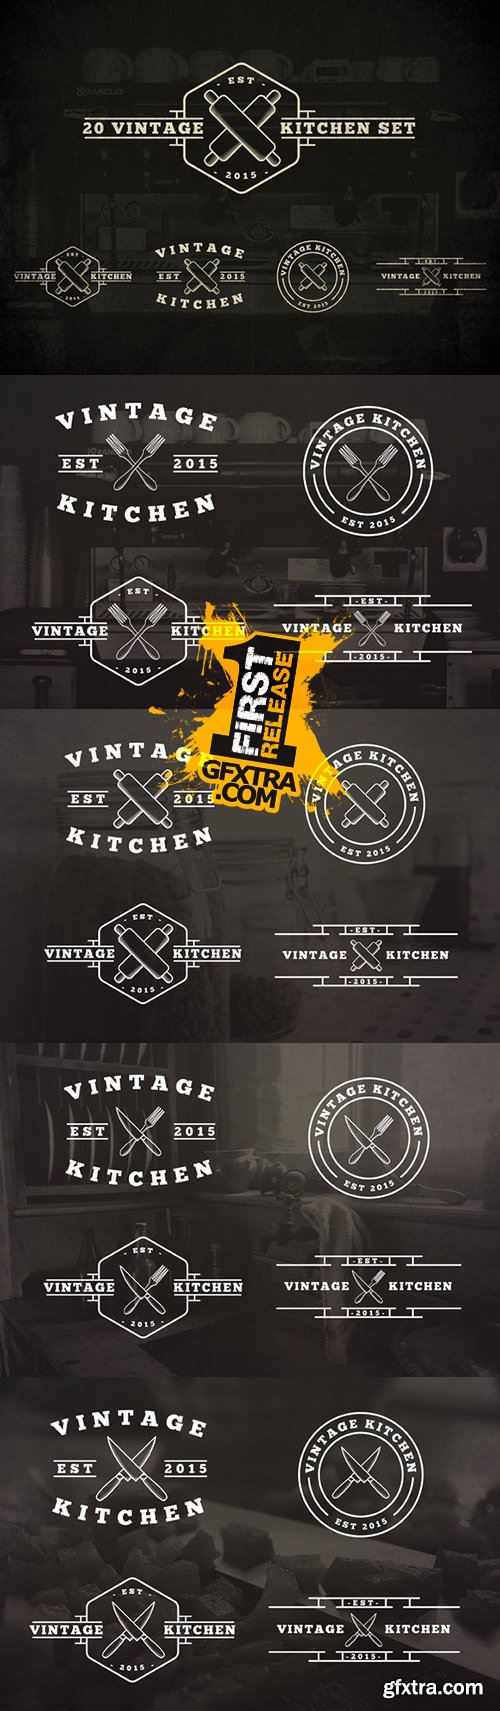 CM - 20 Vintage Kitchen Logos 251049